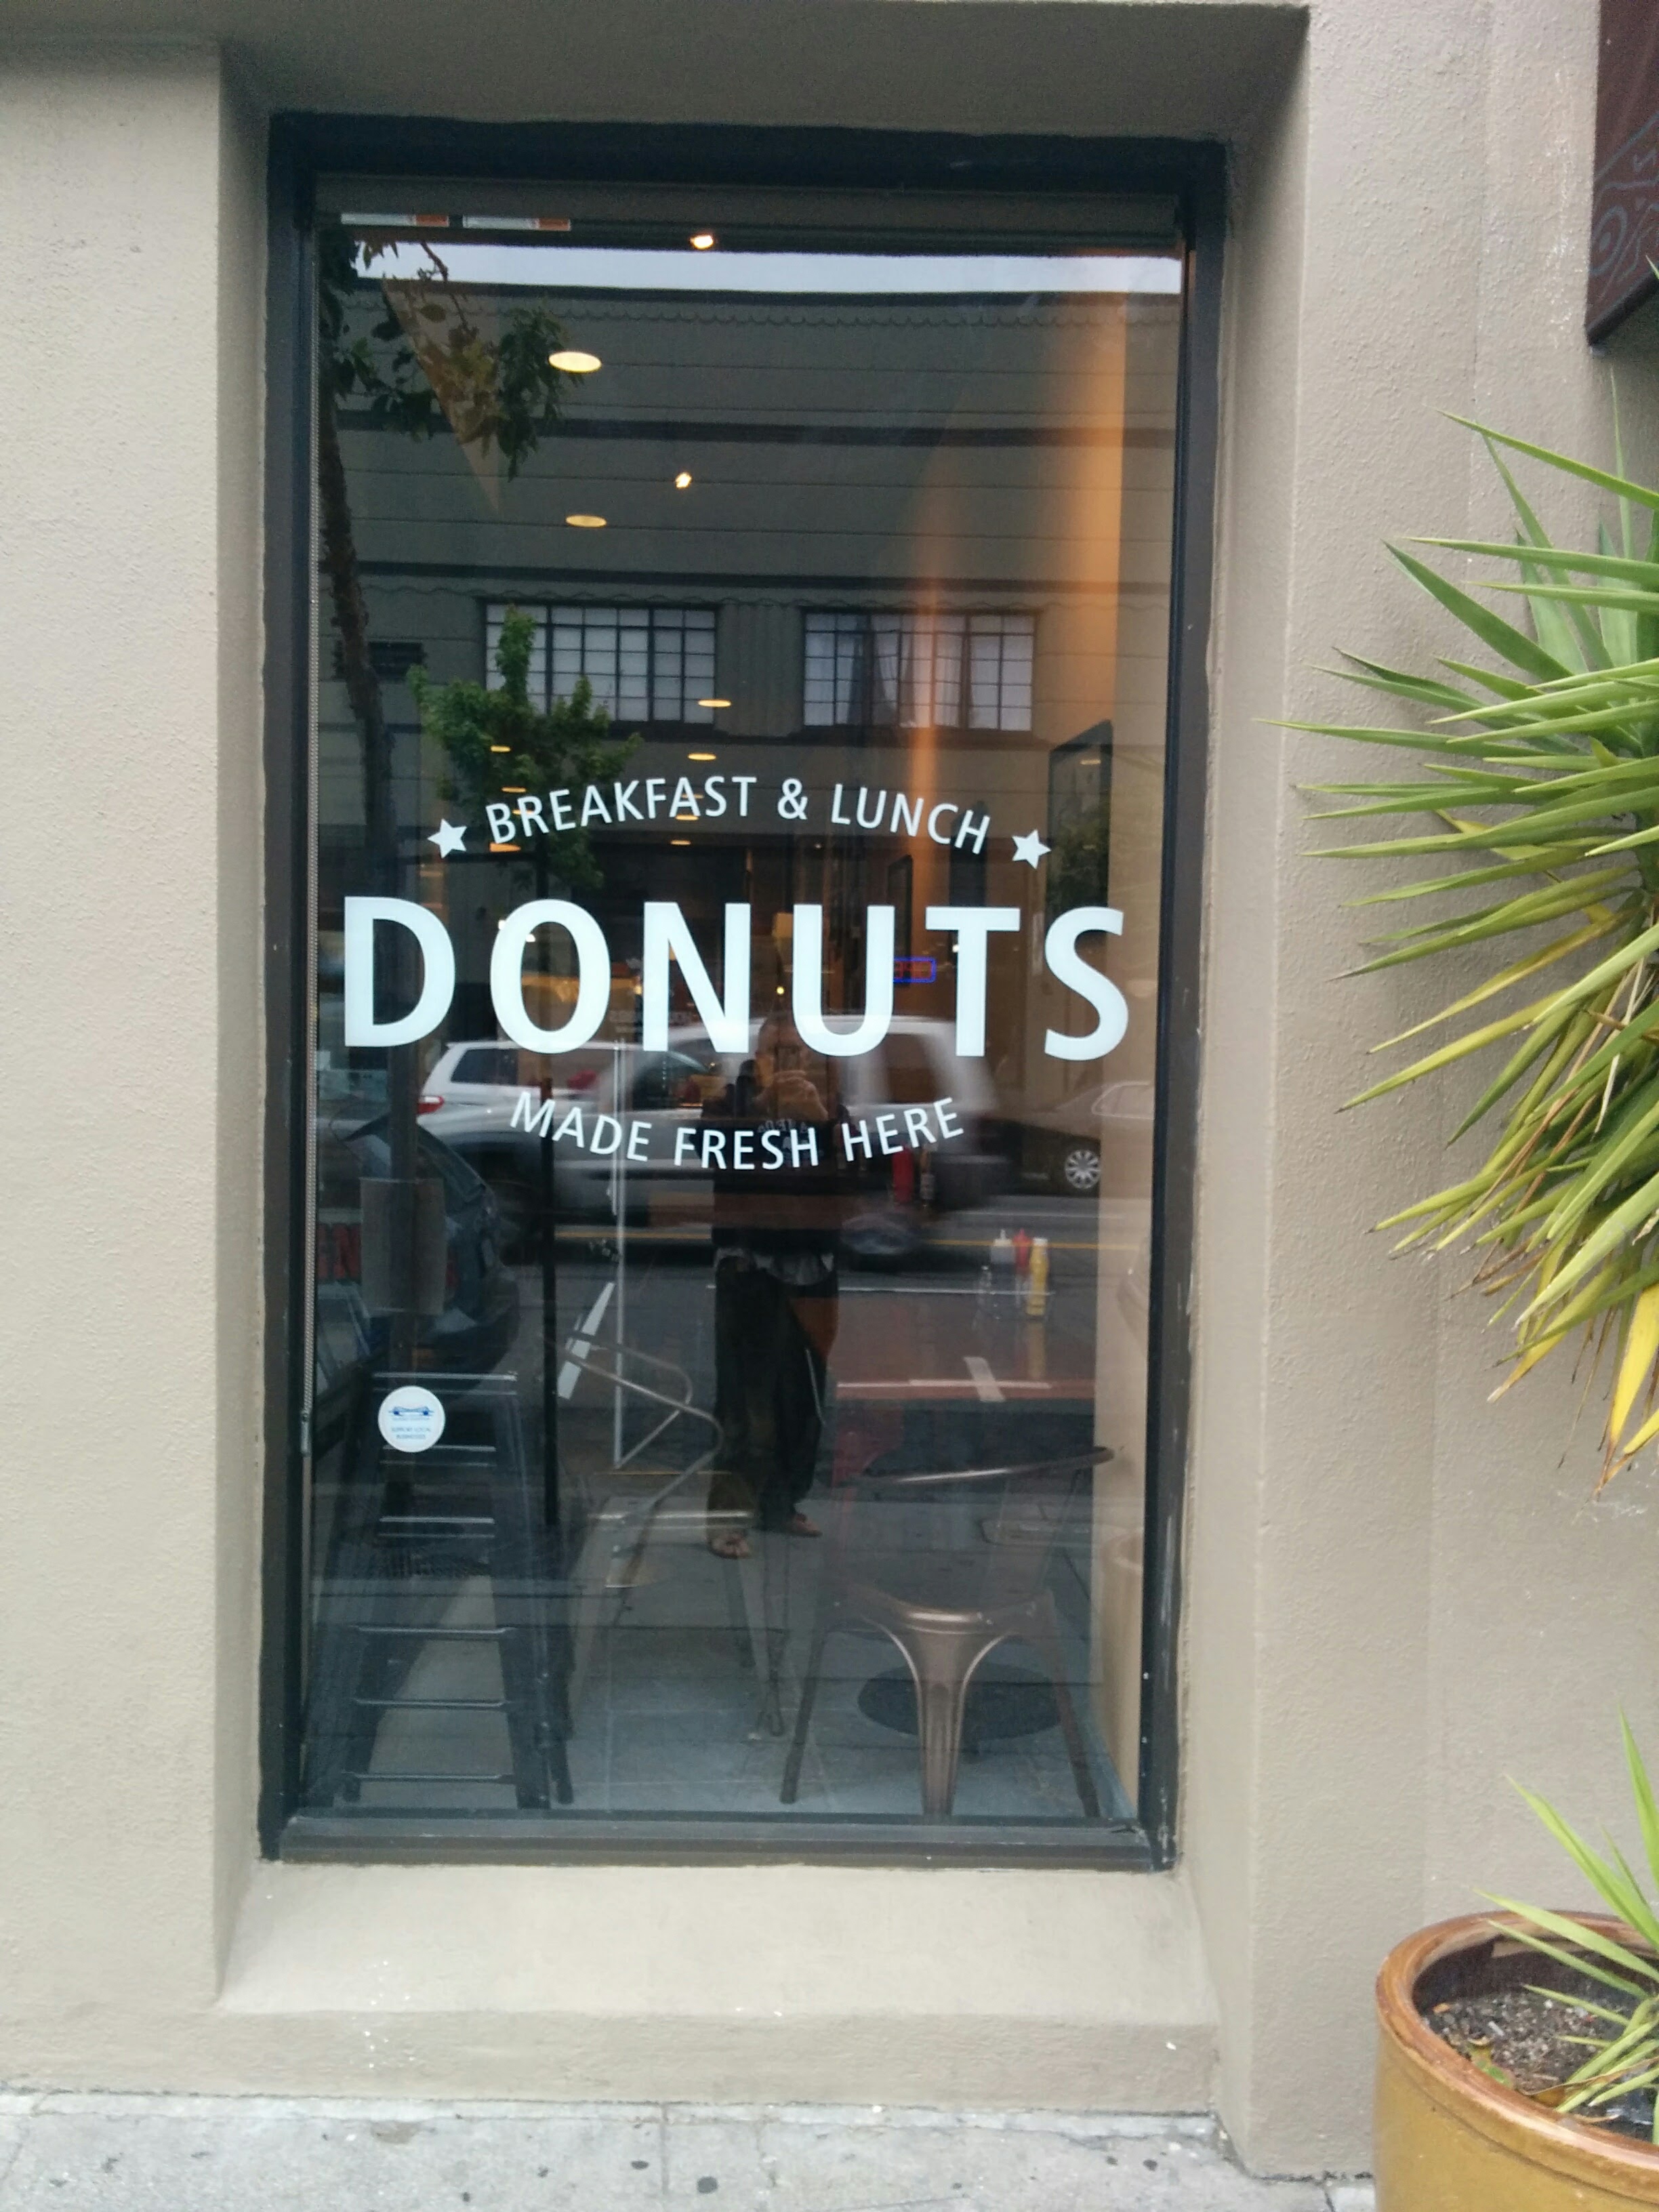 Donuts window graphic